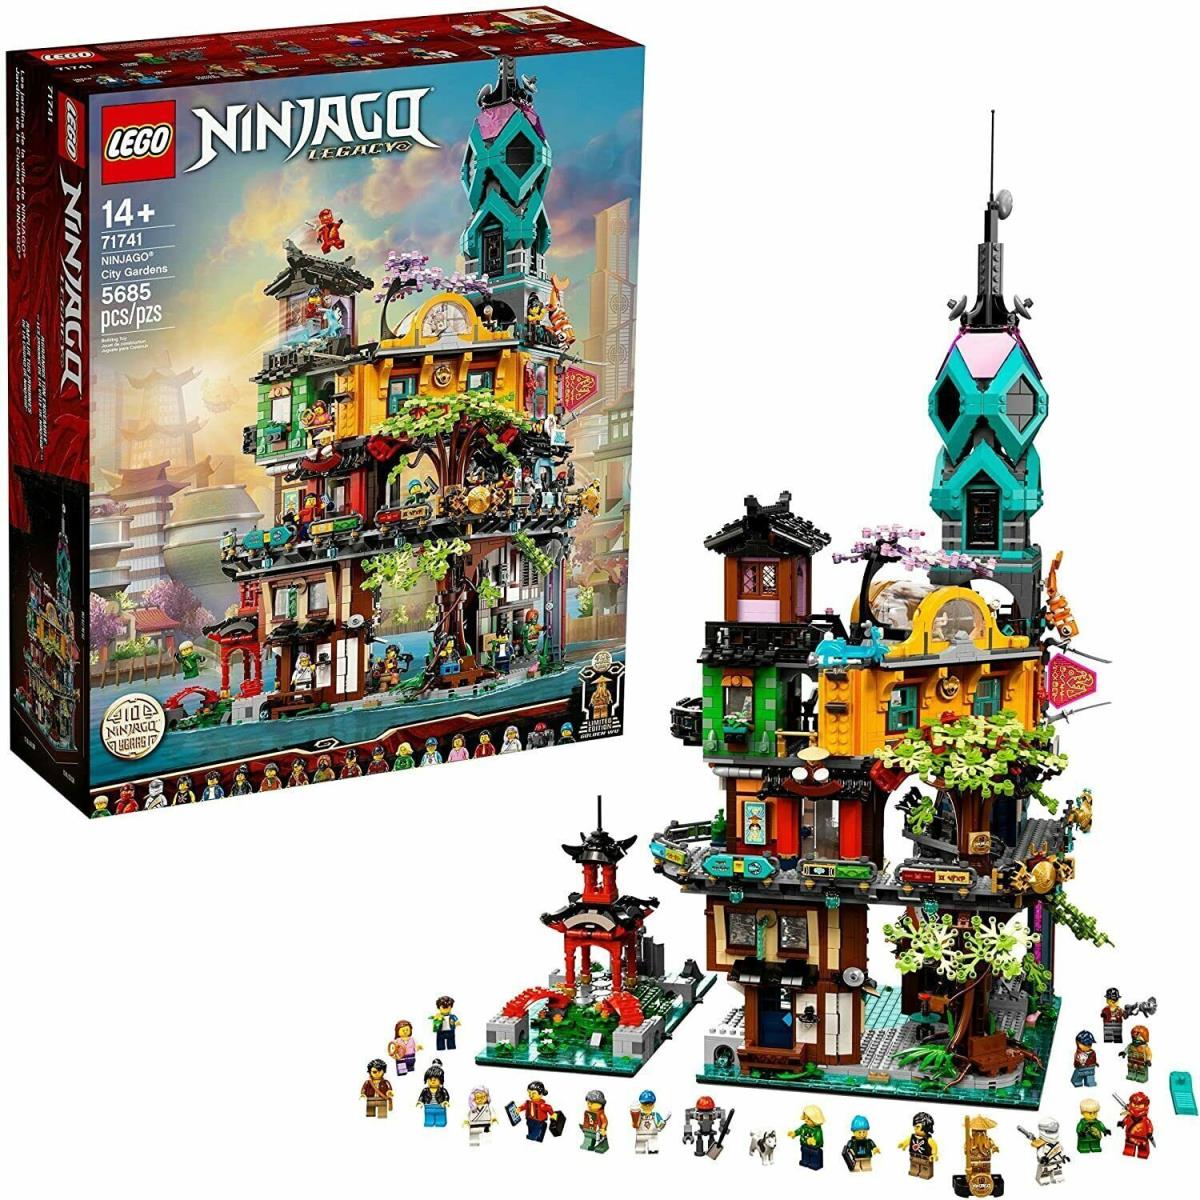 Lego Ninjago City Gardens 71741 Building Kit 5685 Pcs Playset Gift Set